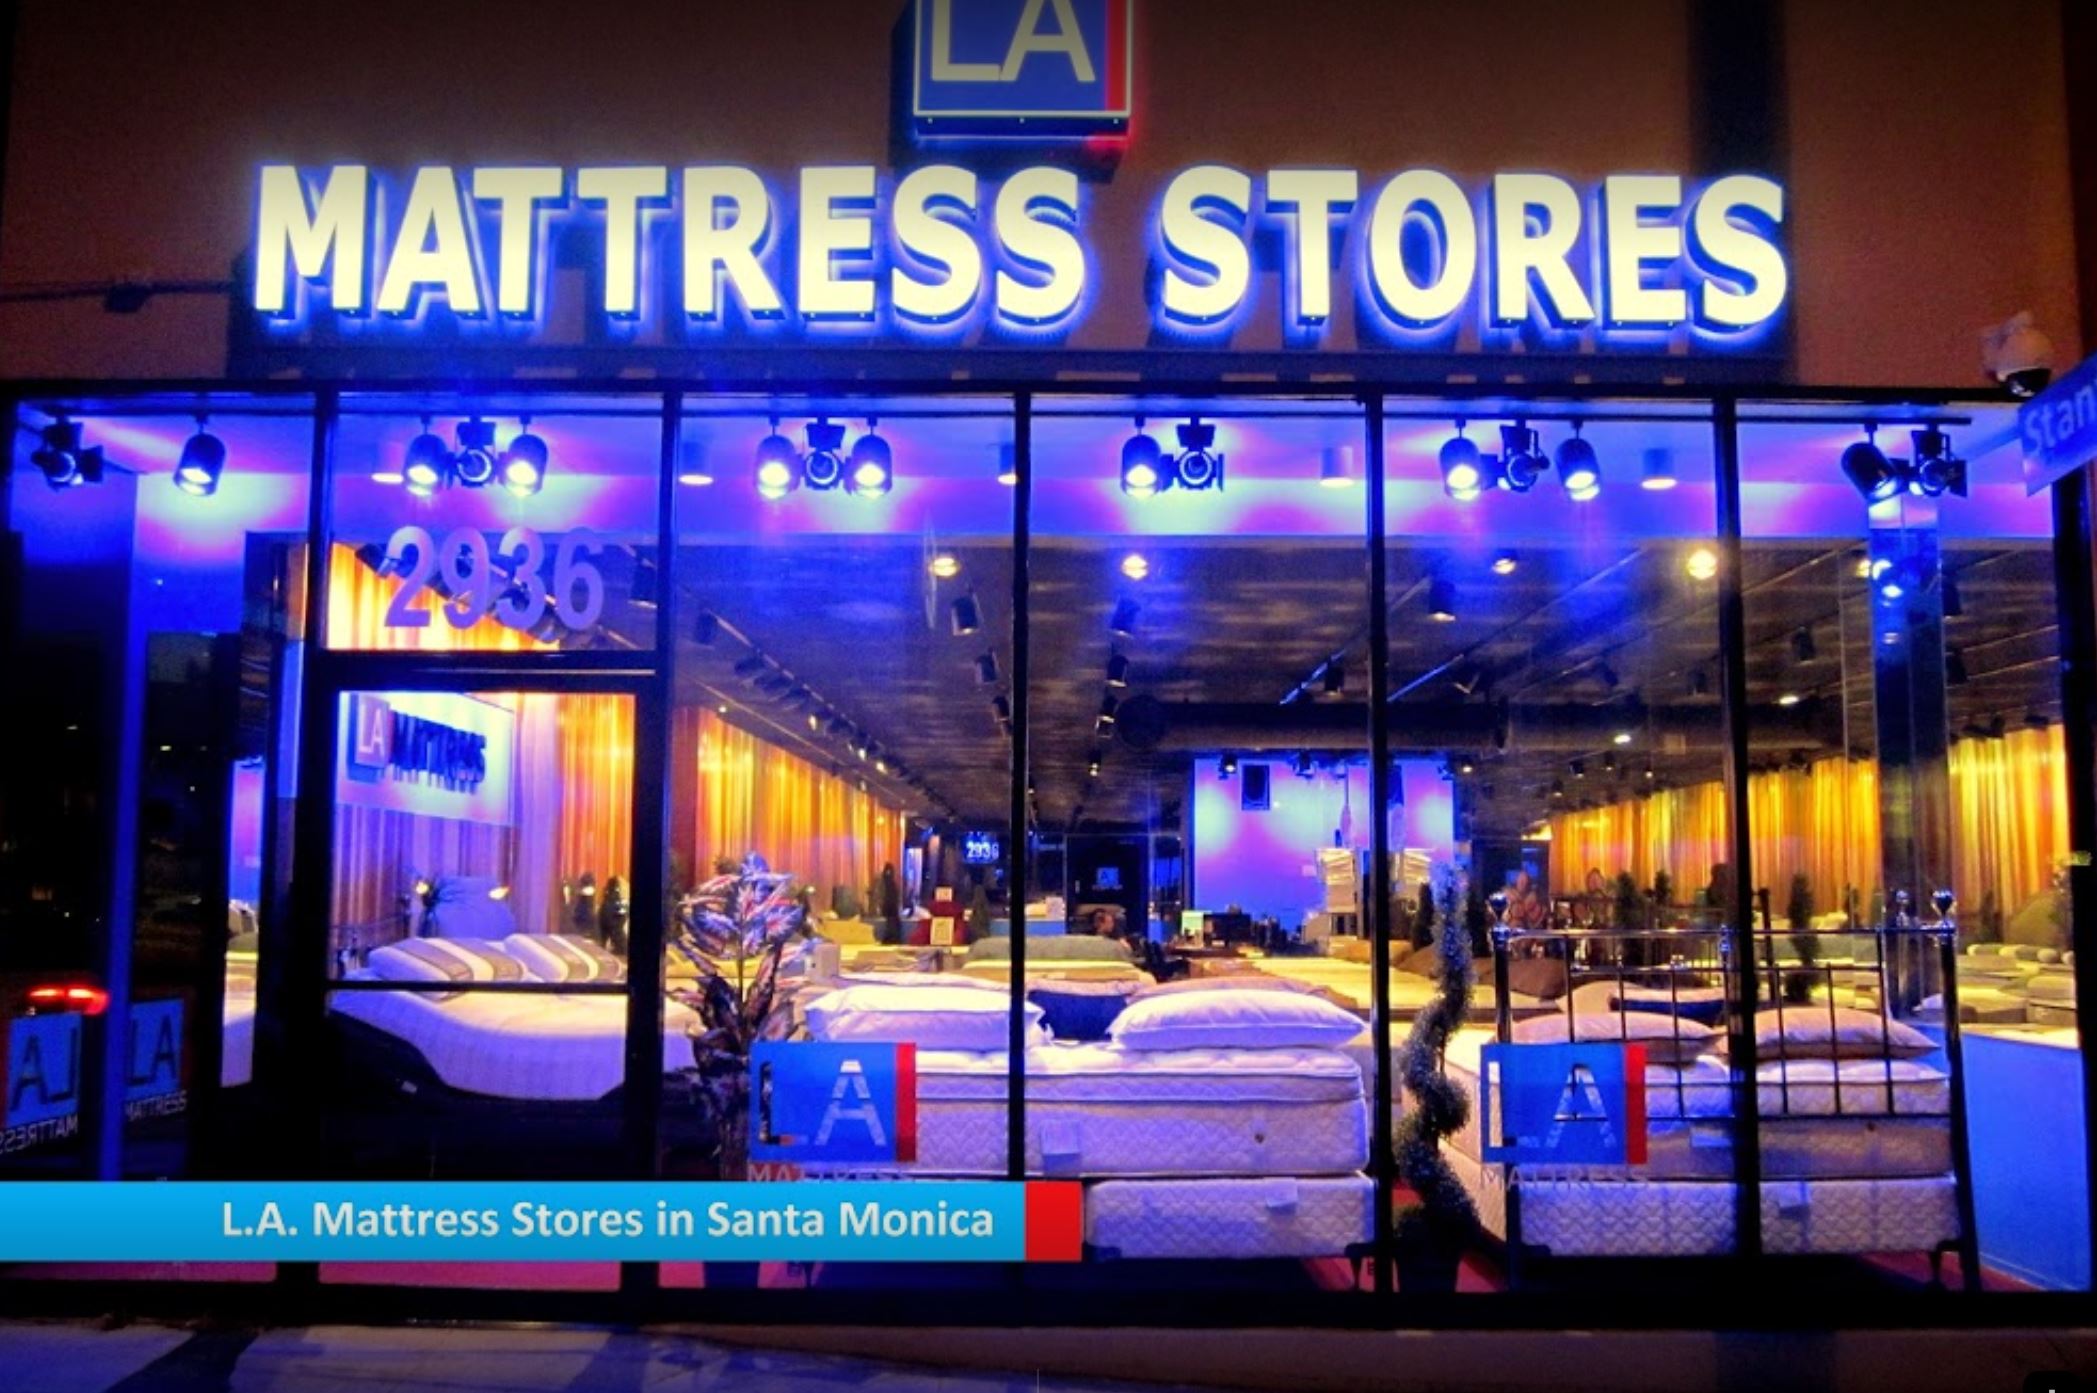 Santa_Monica L.A. Mattrss stores in Santa monica